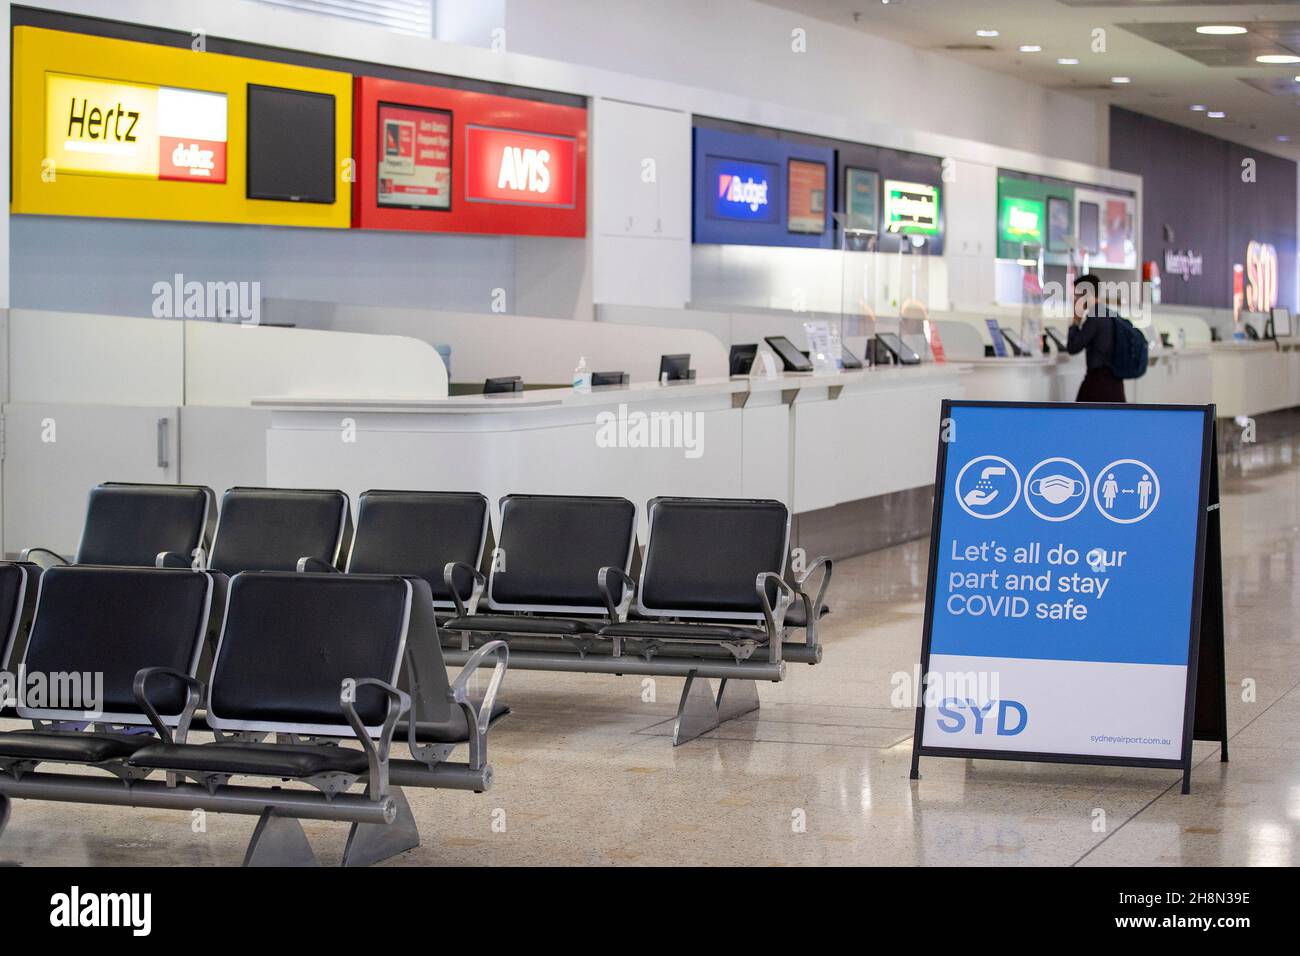 Peking, Australien. 1st Dez 2021. Ein Passagier wird am 1. Dezember 2021 am Sydney Airport in Sydney, Australien, gesehen. Quelle: Bai Xuefei/Xinhua/Alamy Live News Stockfoto